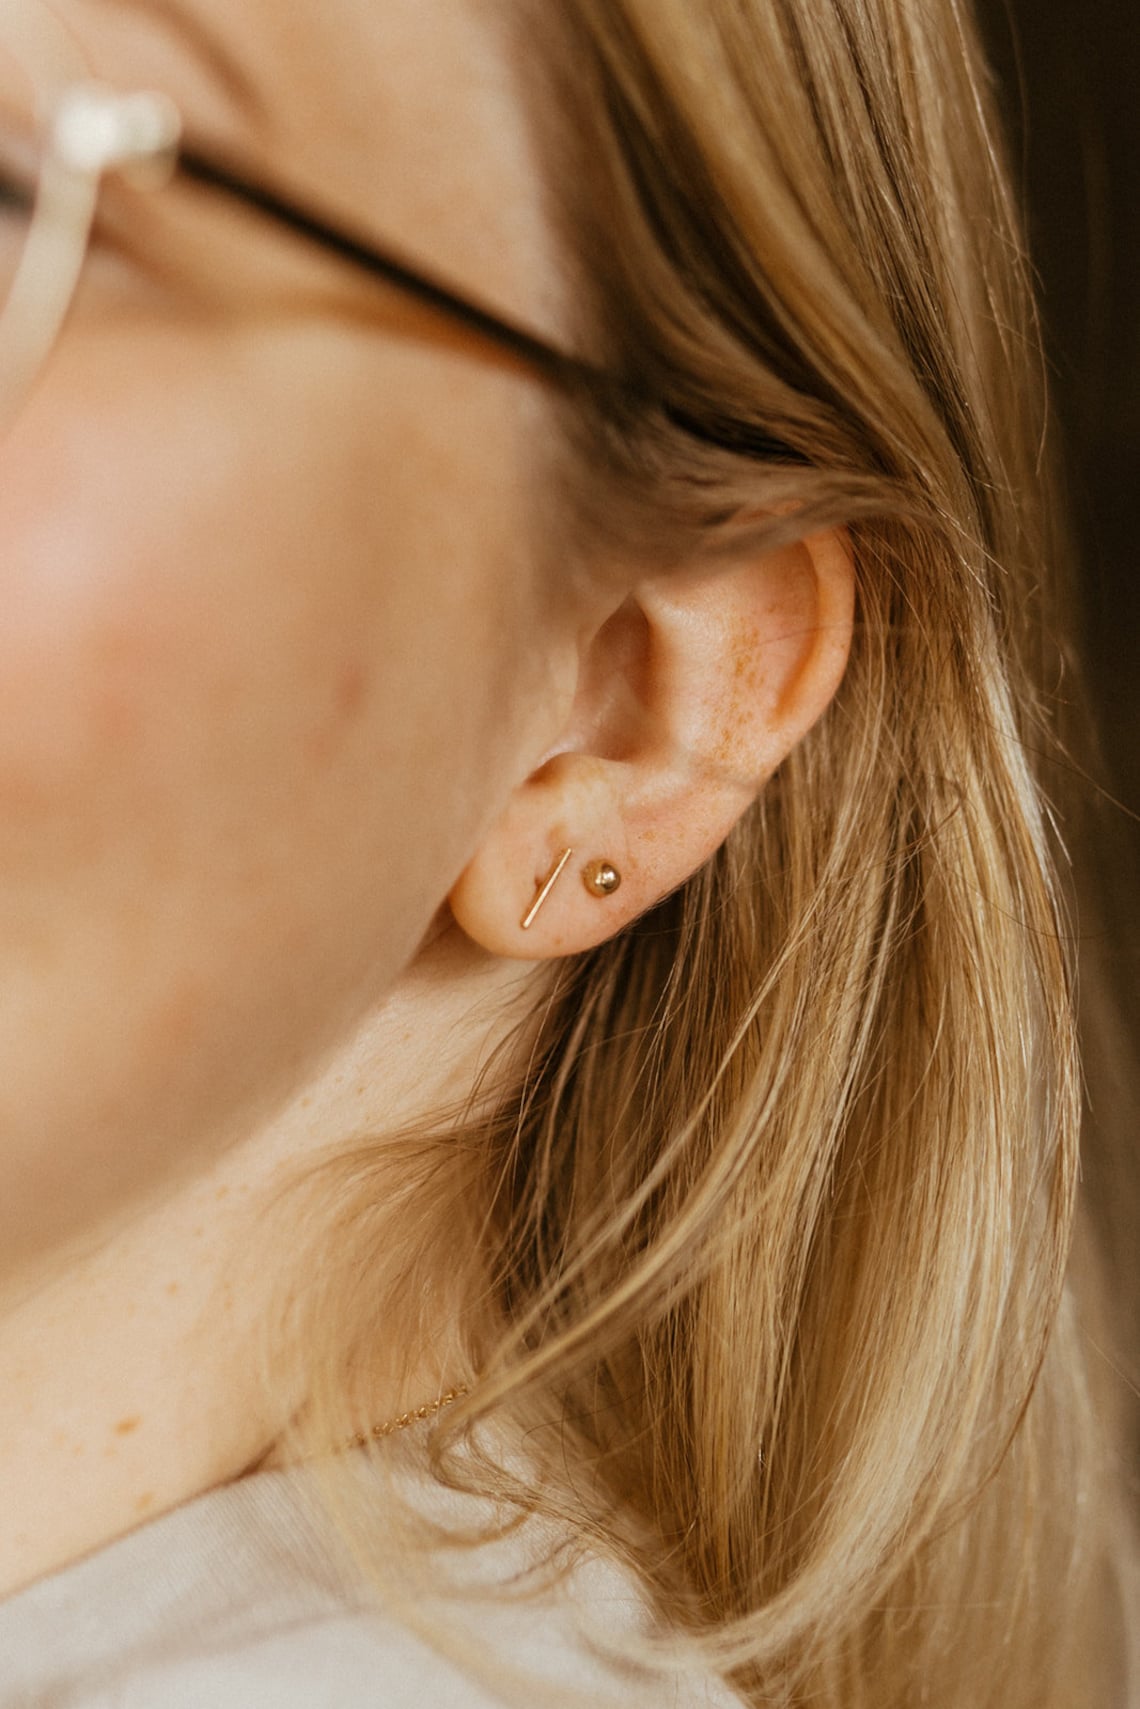 Gold Ball Stud Earrings | 14k Gold Fill | Everyday Earrings